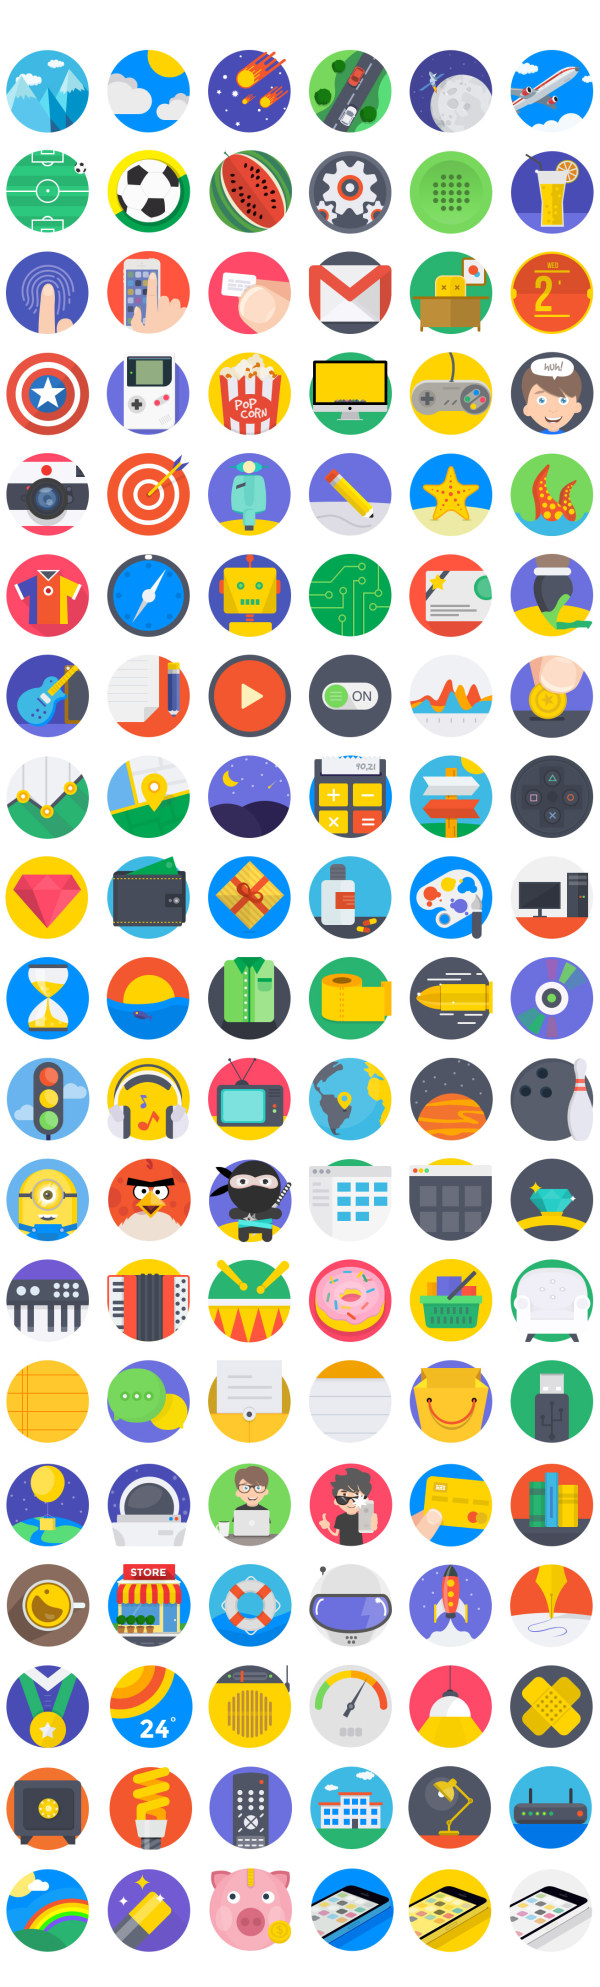 Round cute app icons psd set